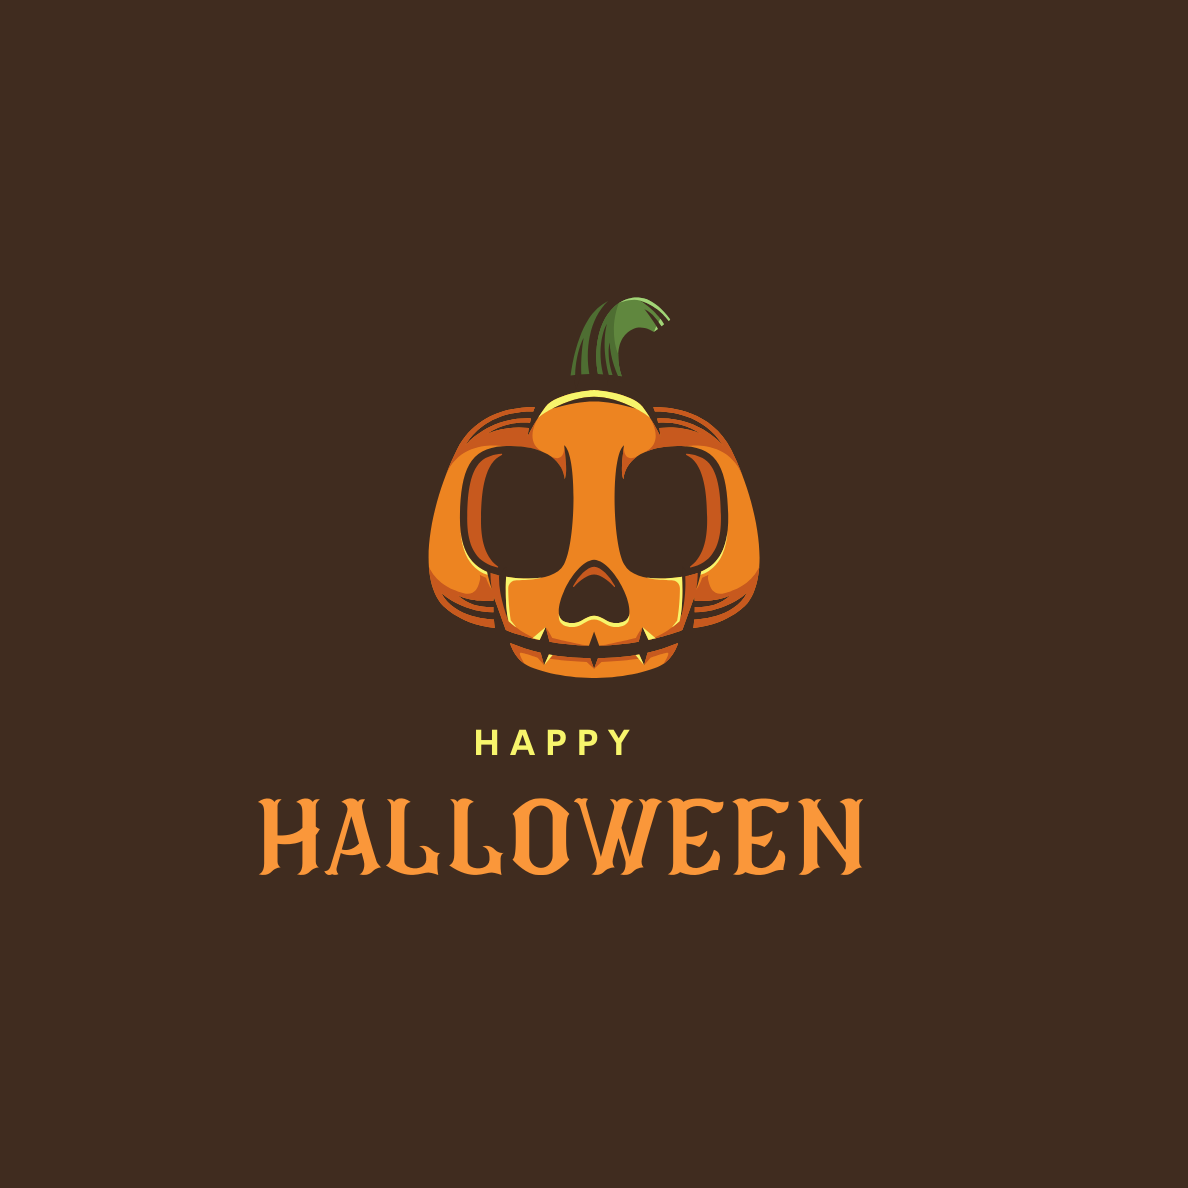 Pumpkin Illustration Logos preview image.